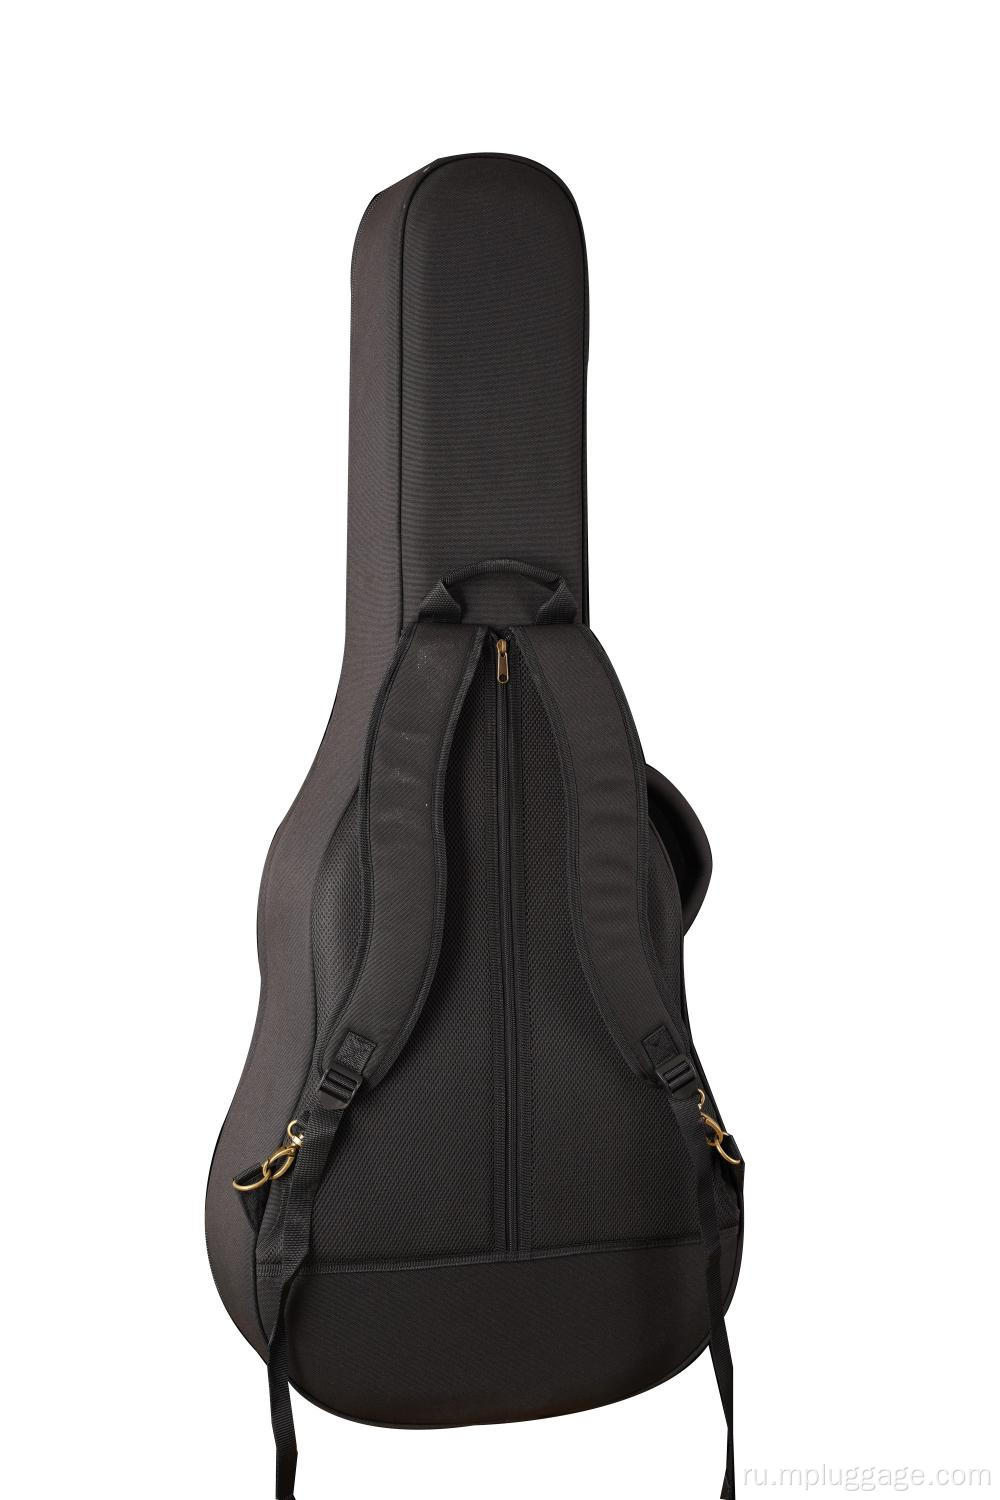 Рюкзак с акустической гитарой в рюкзак